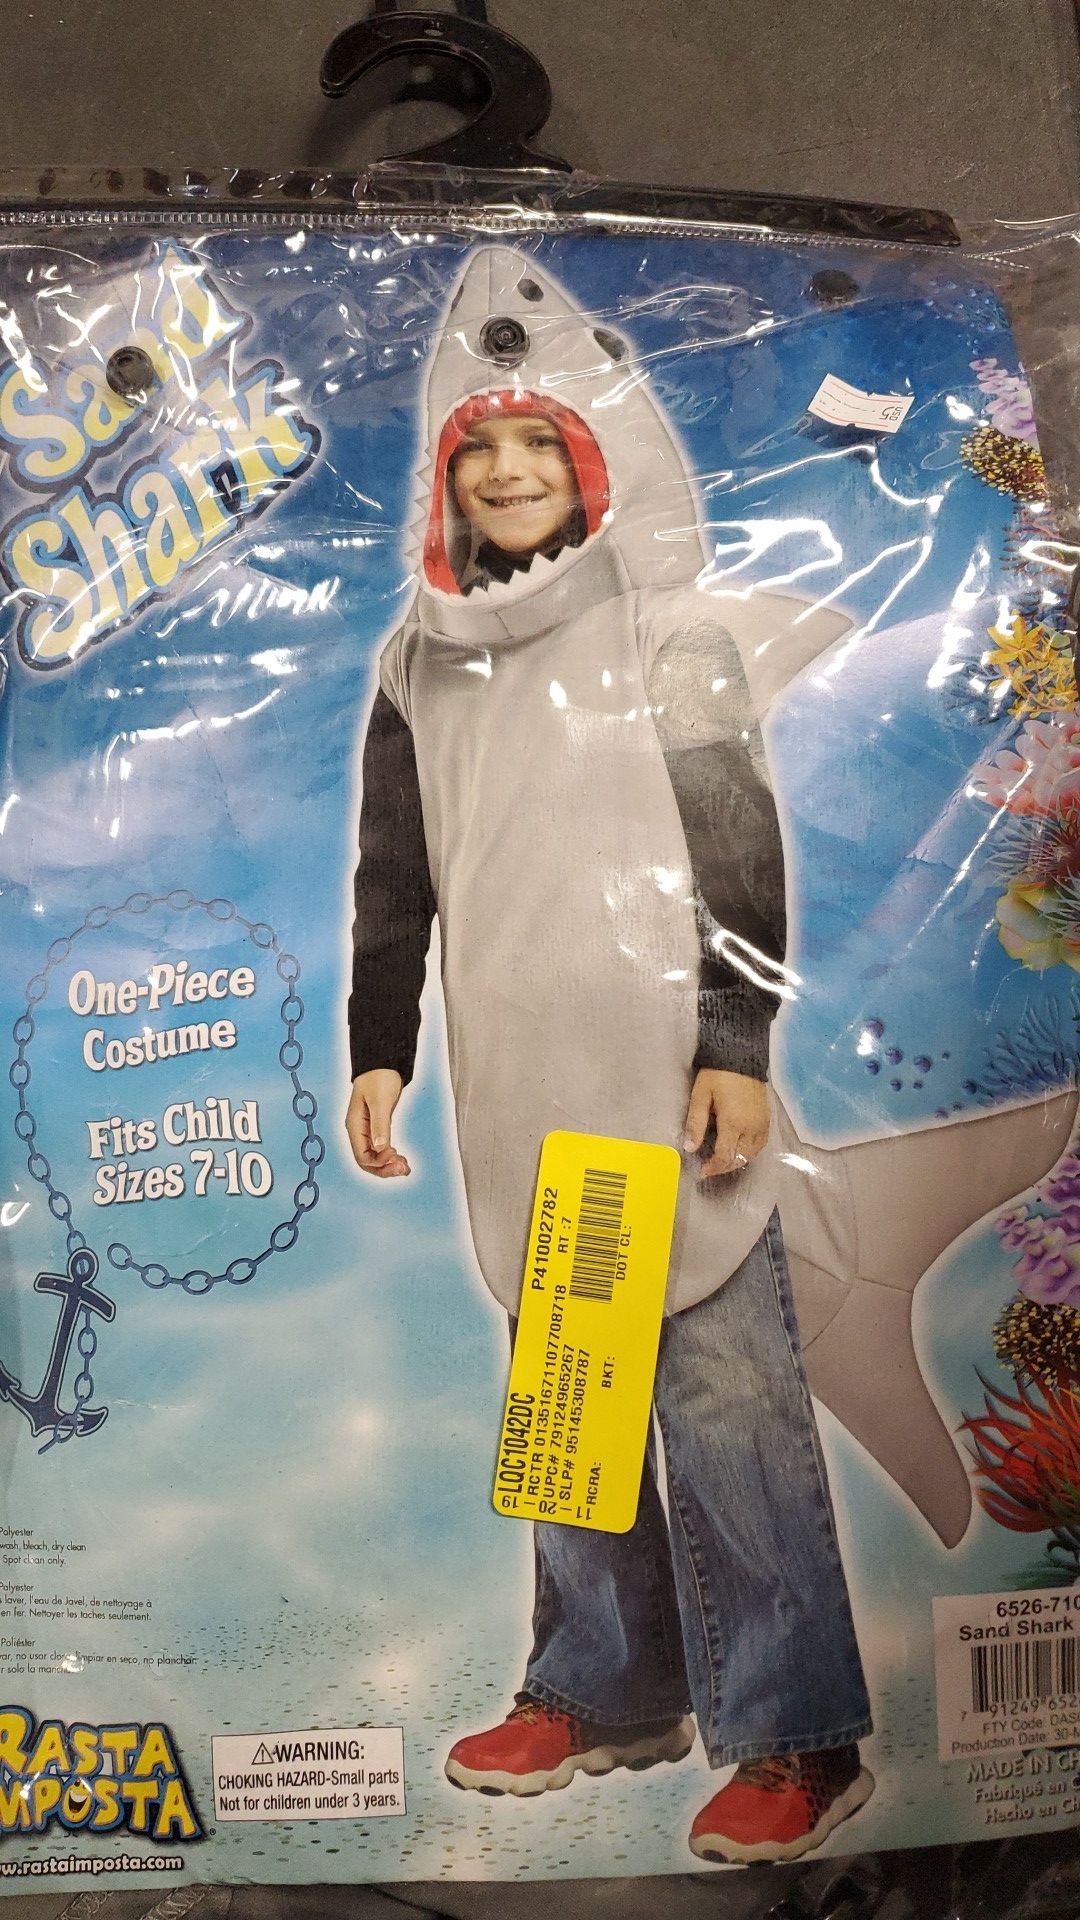 Sand shark costume size 7 to 10